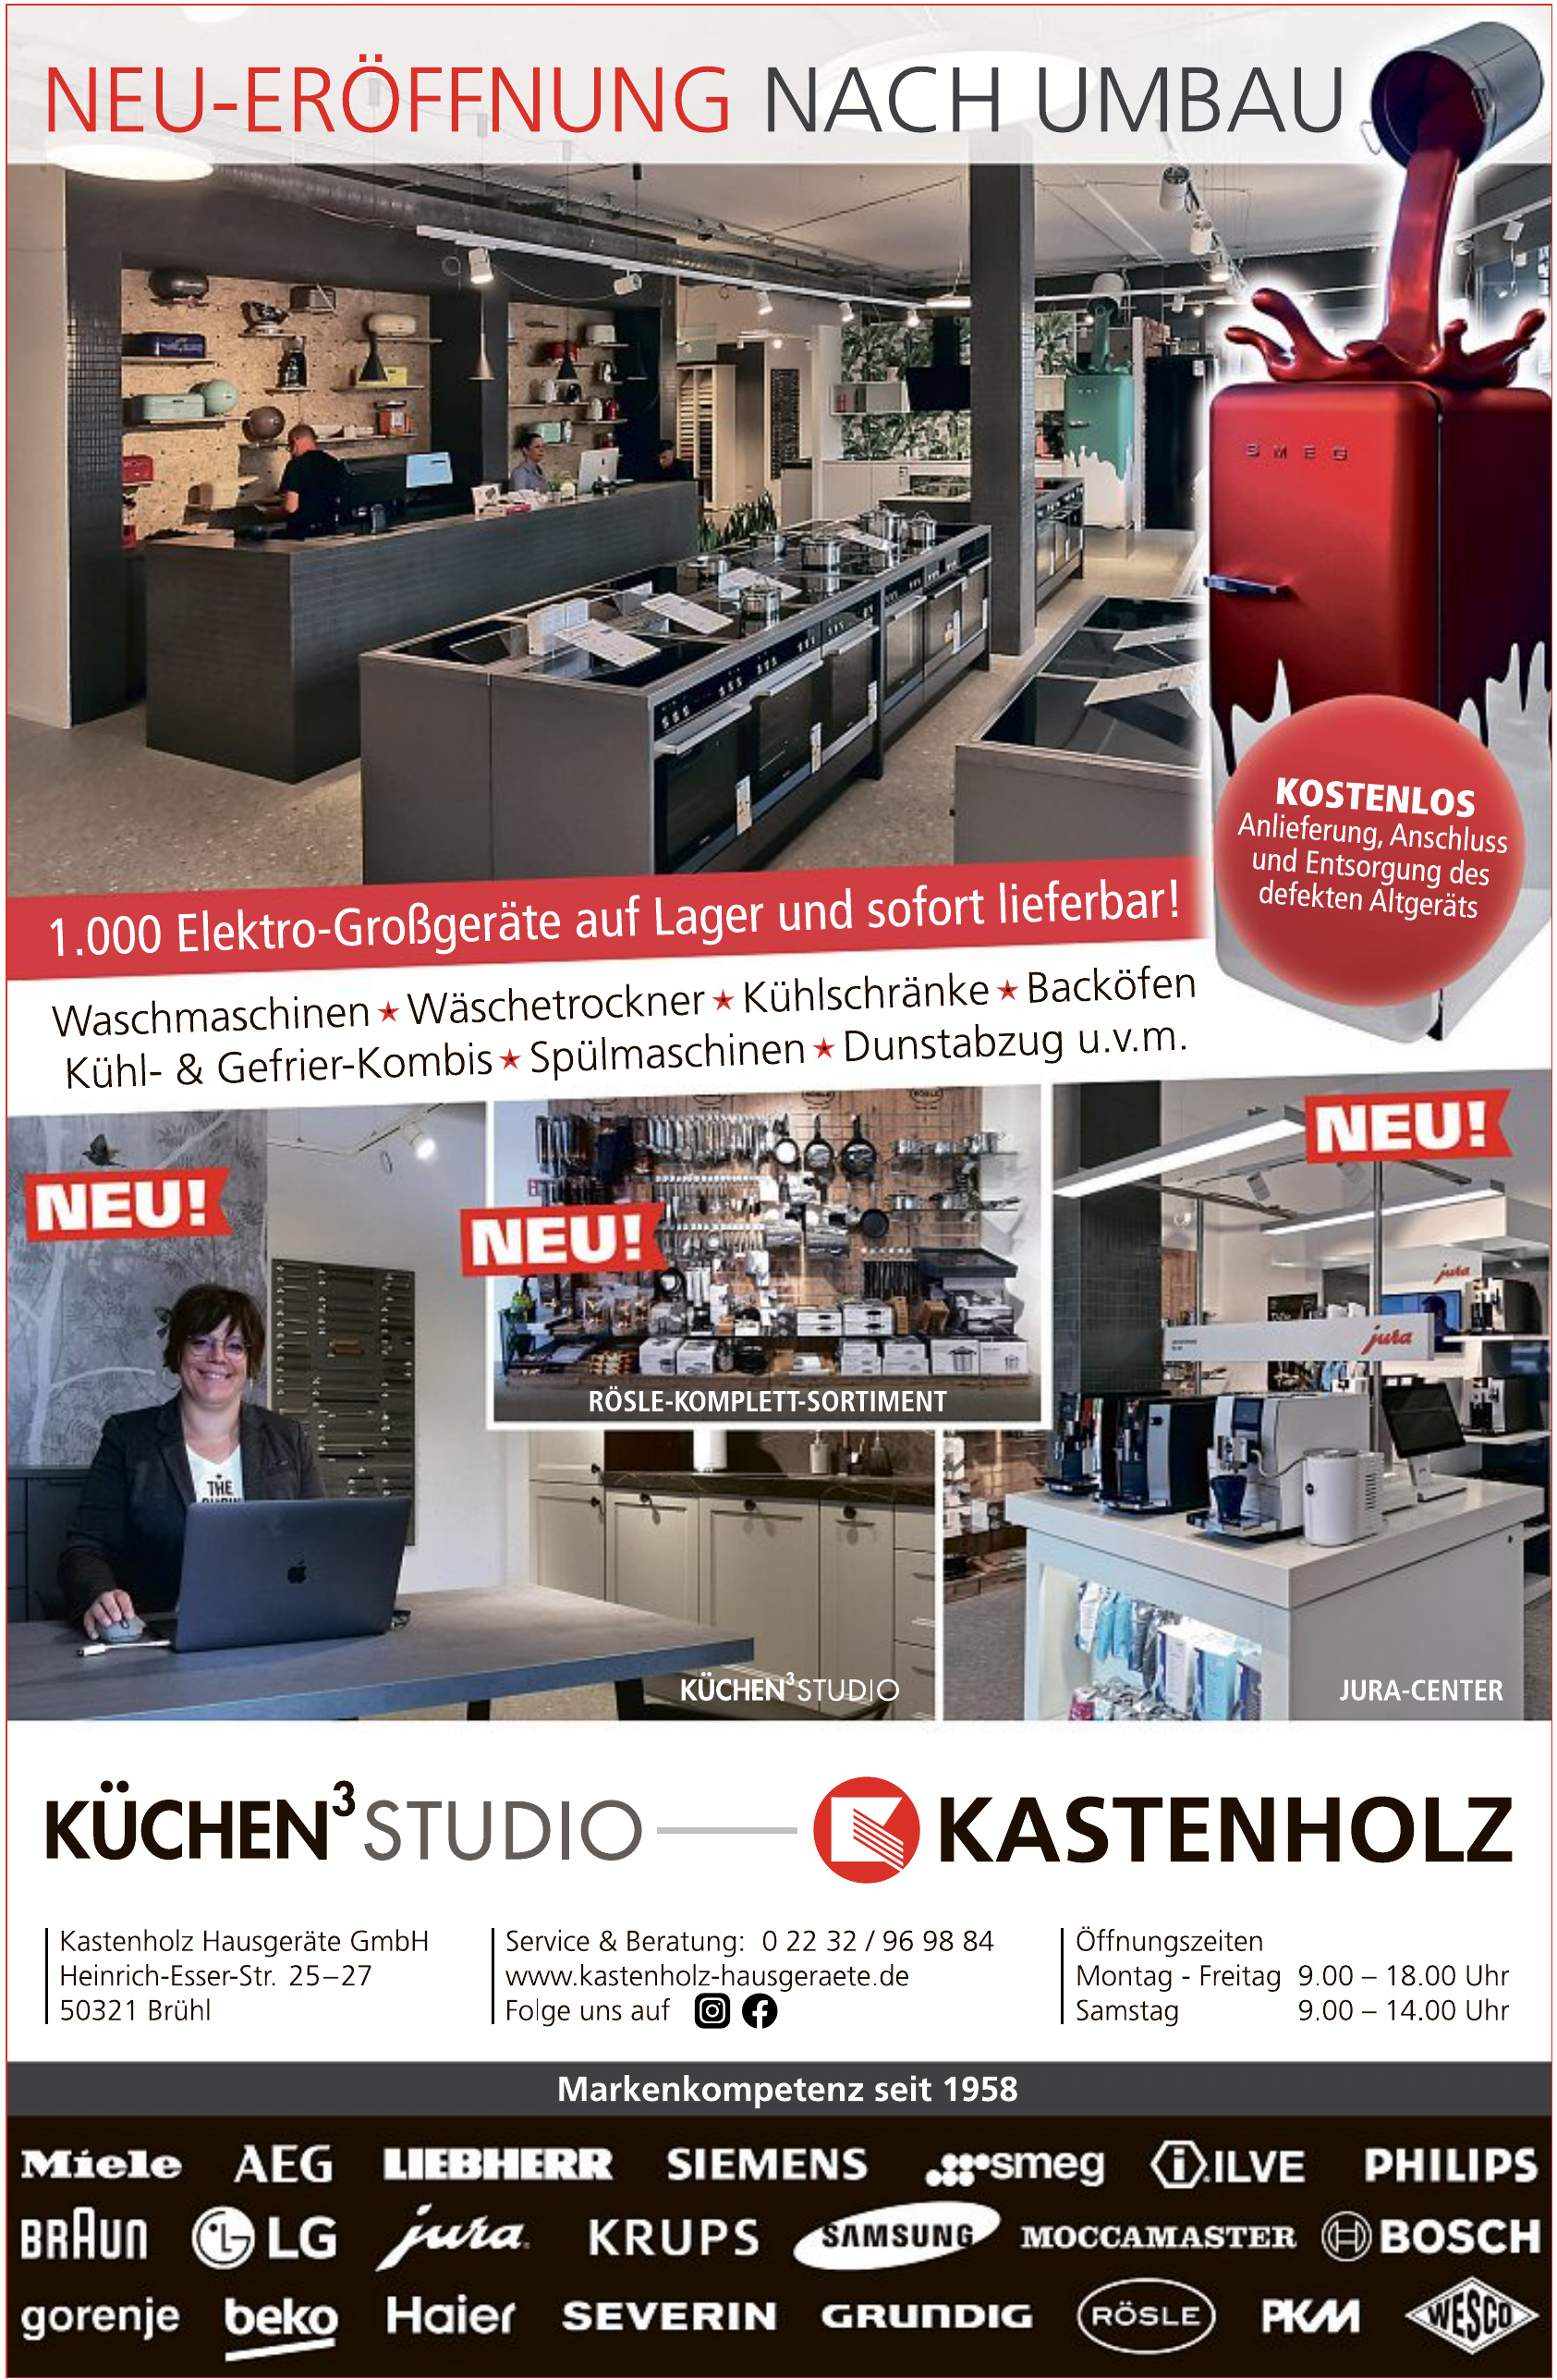 Kastenholz Hausgeräte GmbH